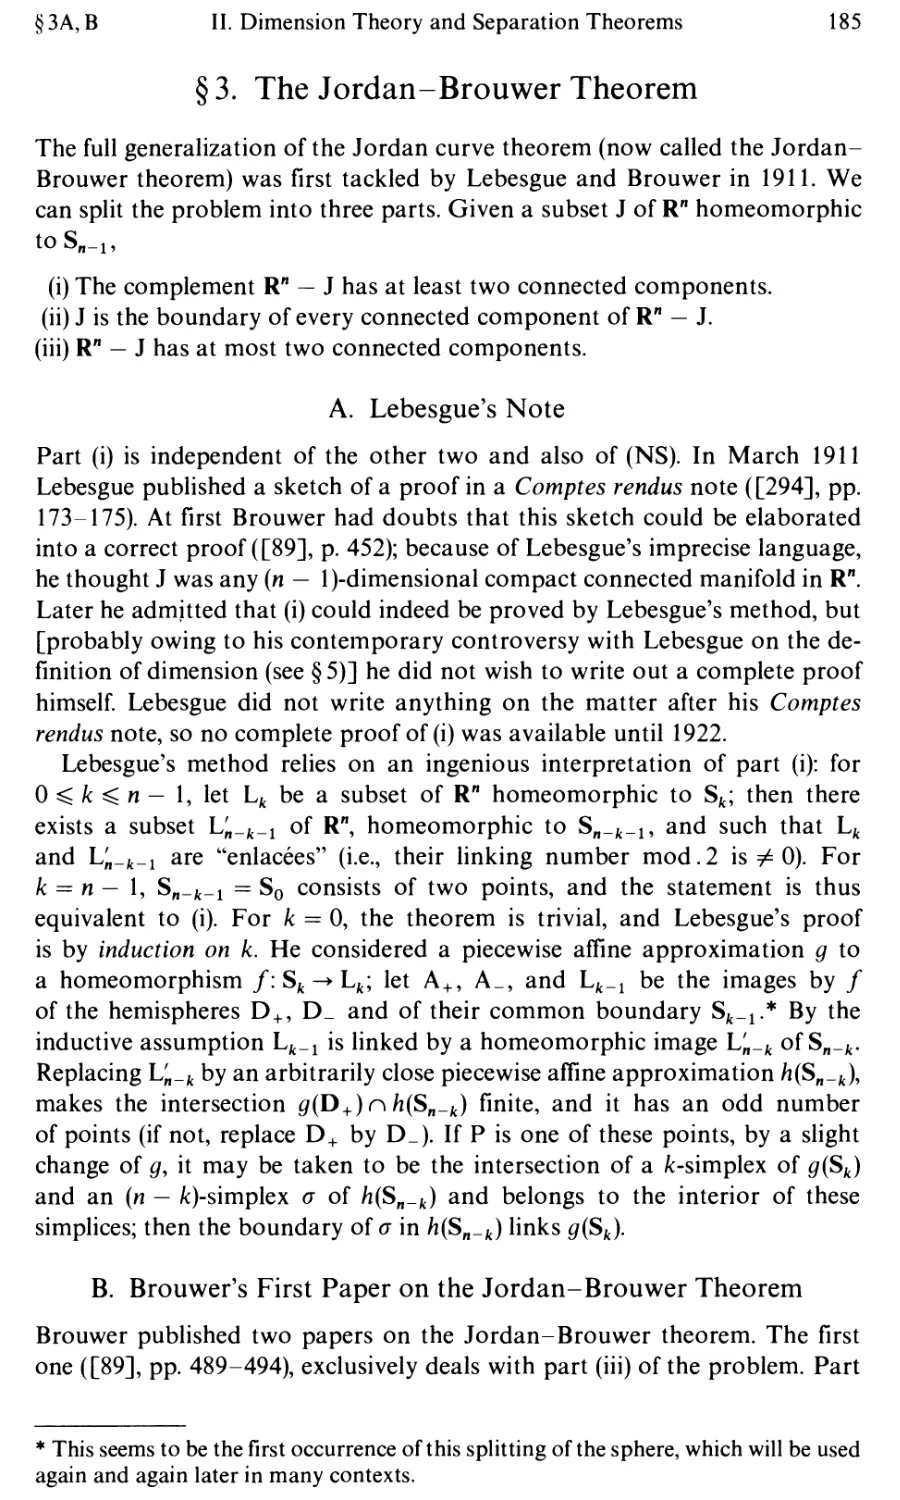 §3. The Jordan-Brouwer Theorem
B. Brouwer's First Paper on the Jordan-Brouwer Theorem